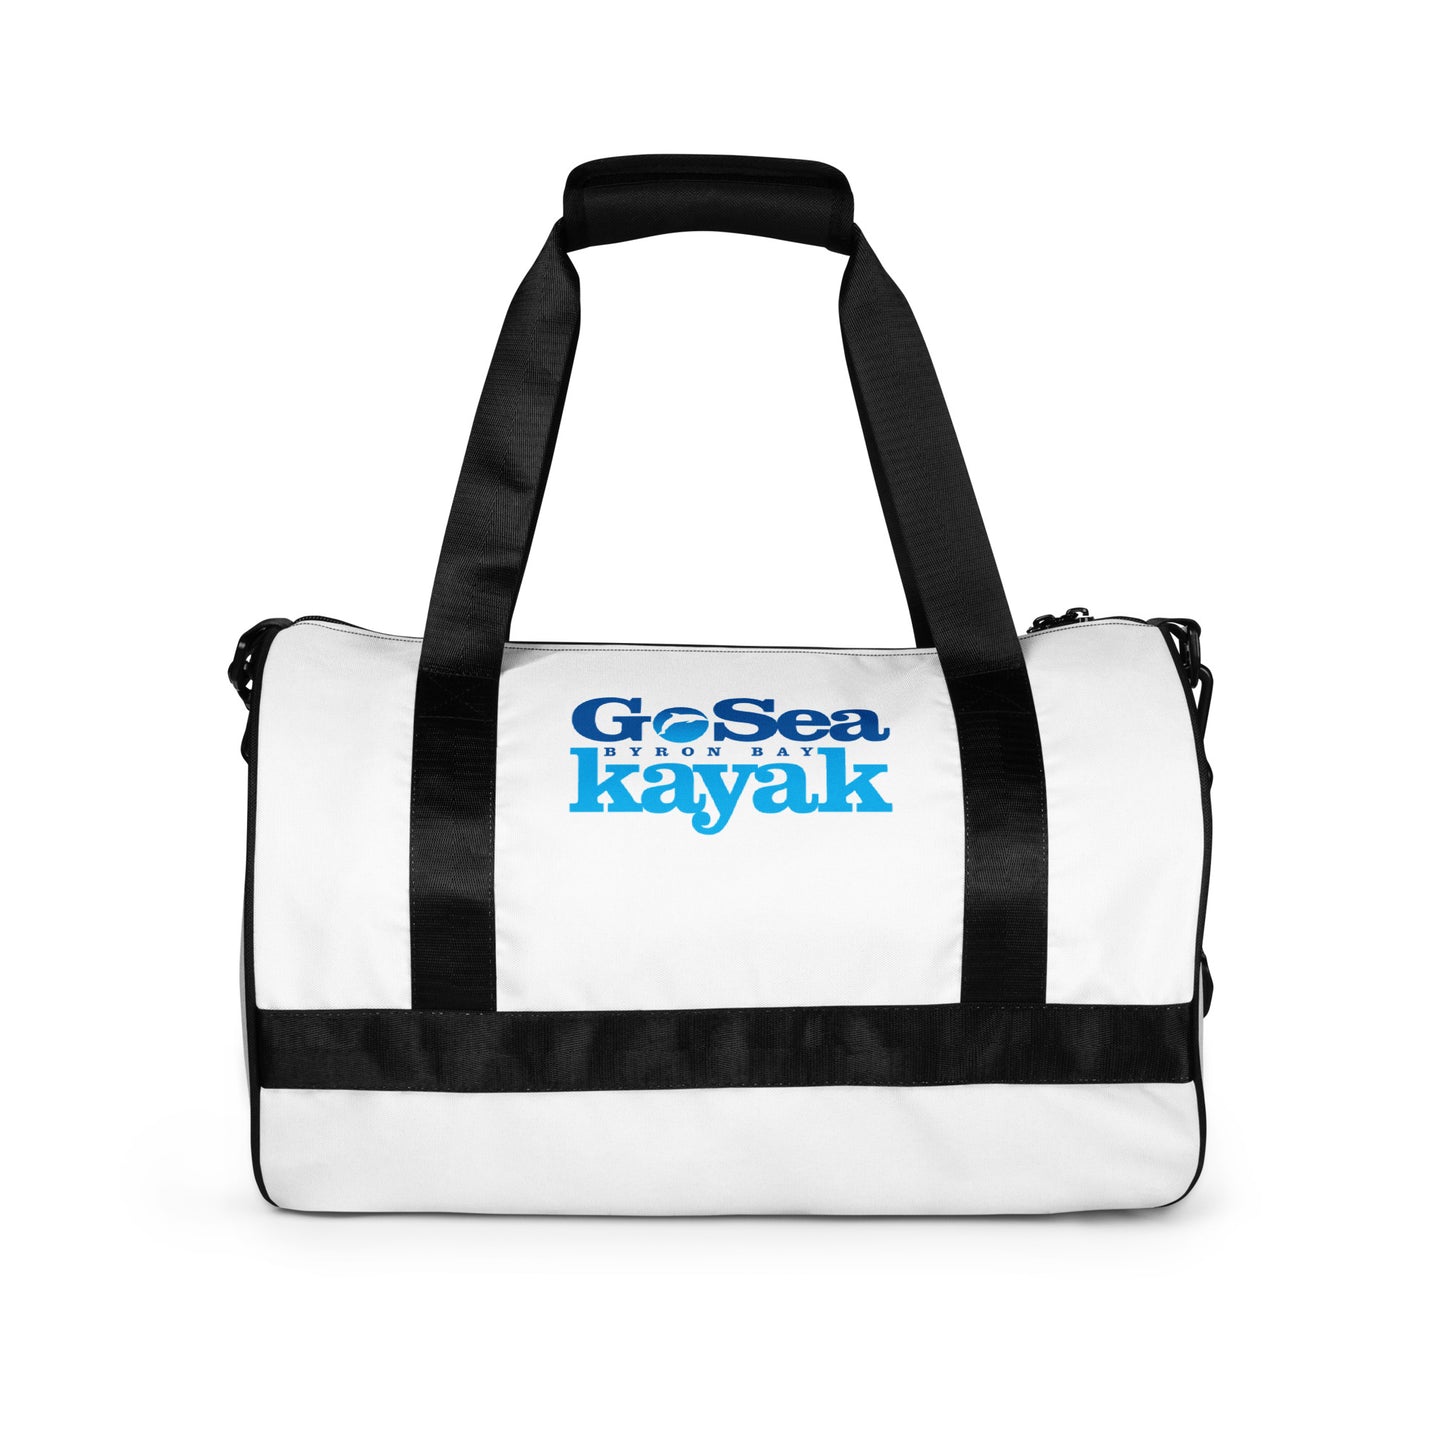  Gym Bag - White with black trim/detail - Side view - With Go Sea Kayak Byron Bay logo on both sides - Genuine Byron Bay Merchandise | Produced by Go Sea Kayak Byron Bay 